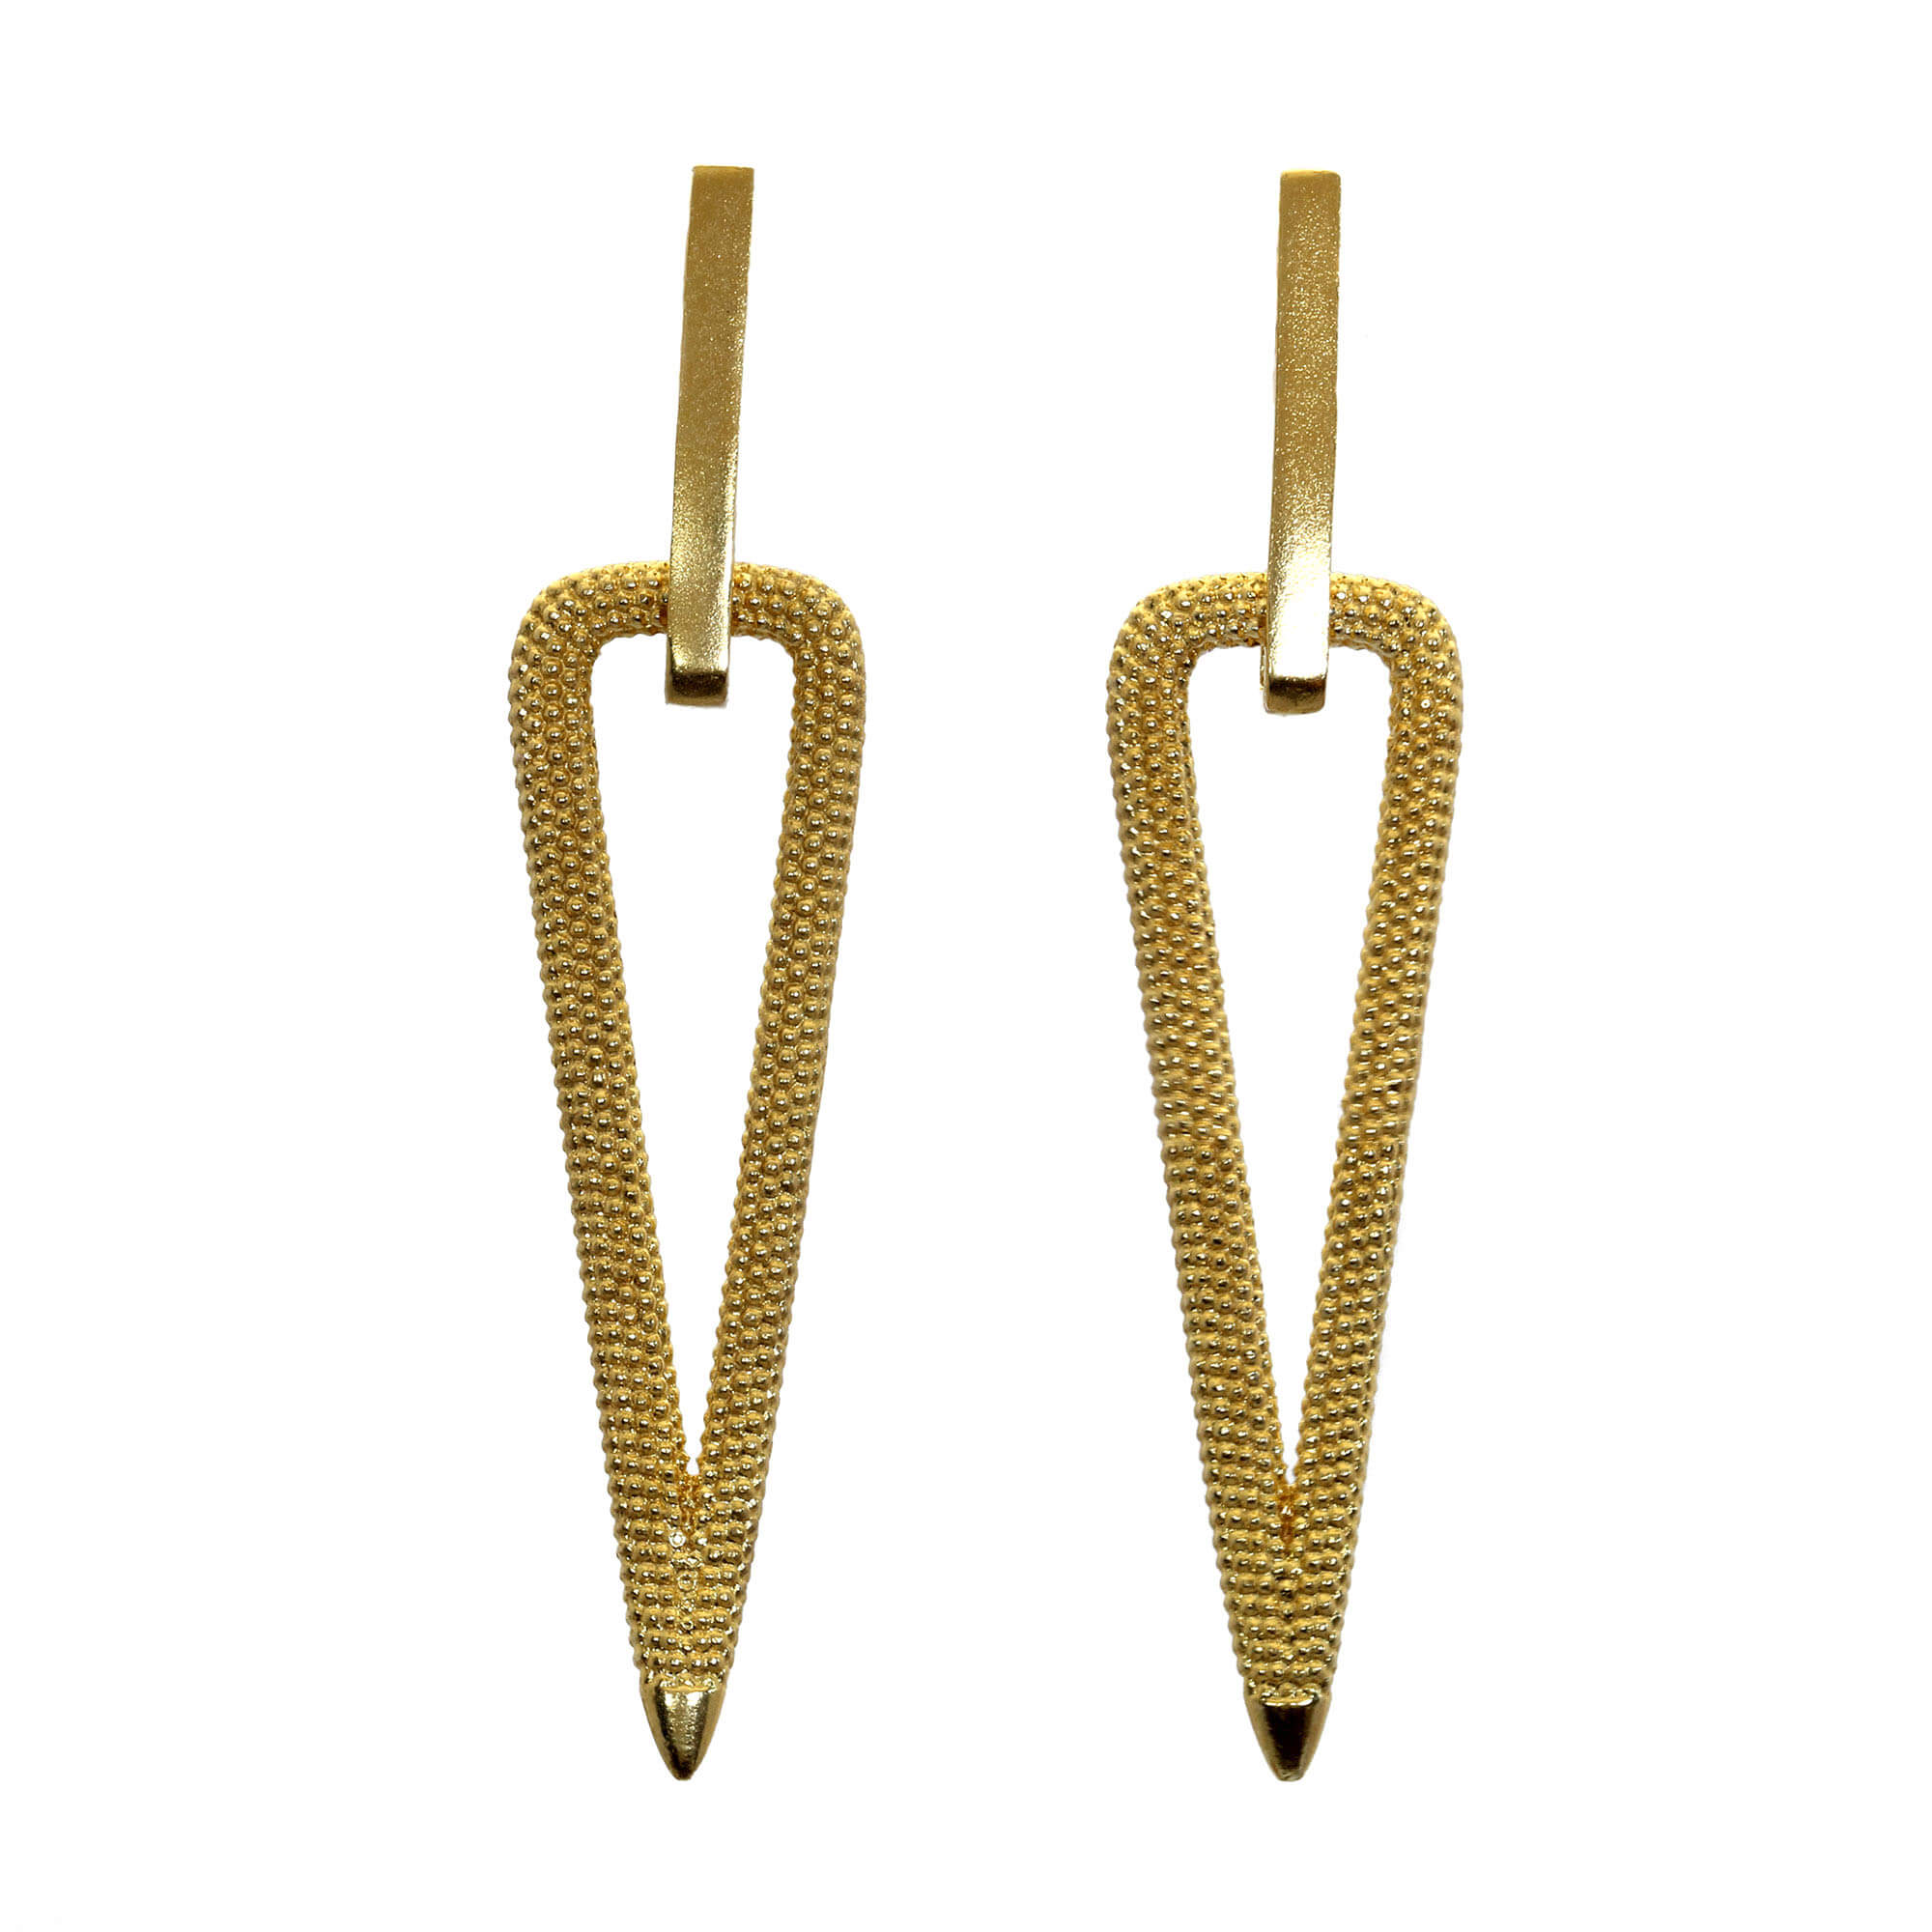 Zinnia Dangle Earrings in yellow gold with textured triangular drop design